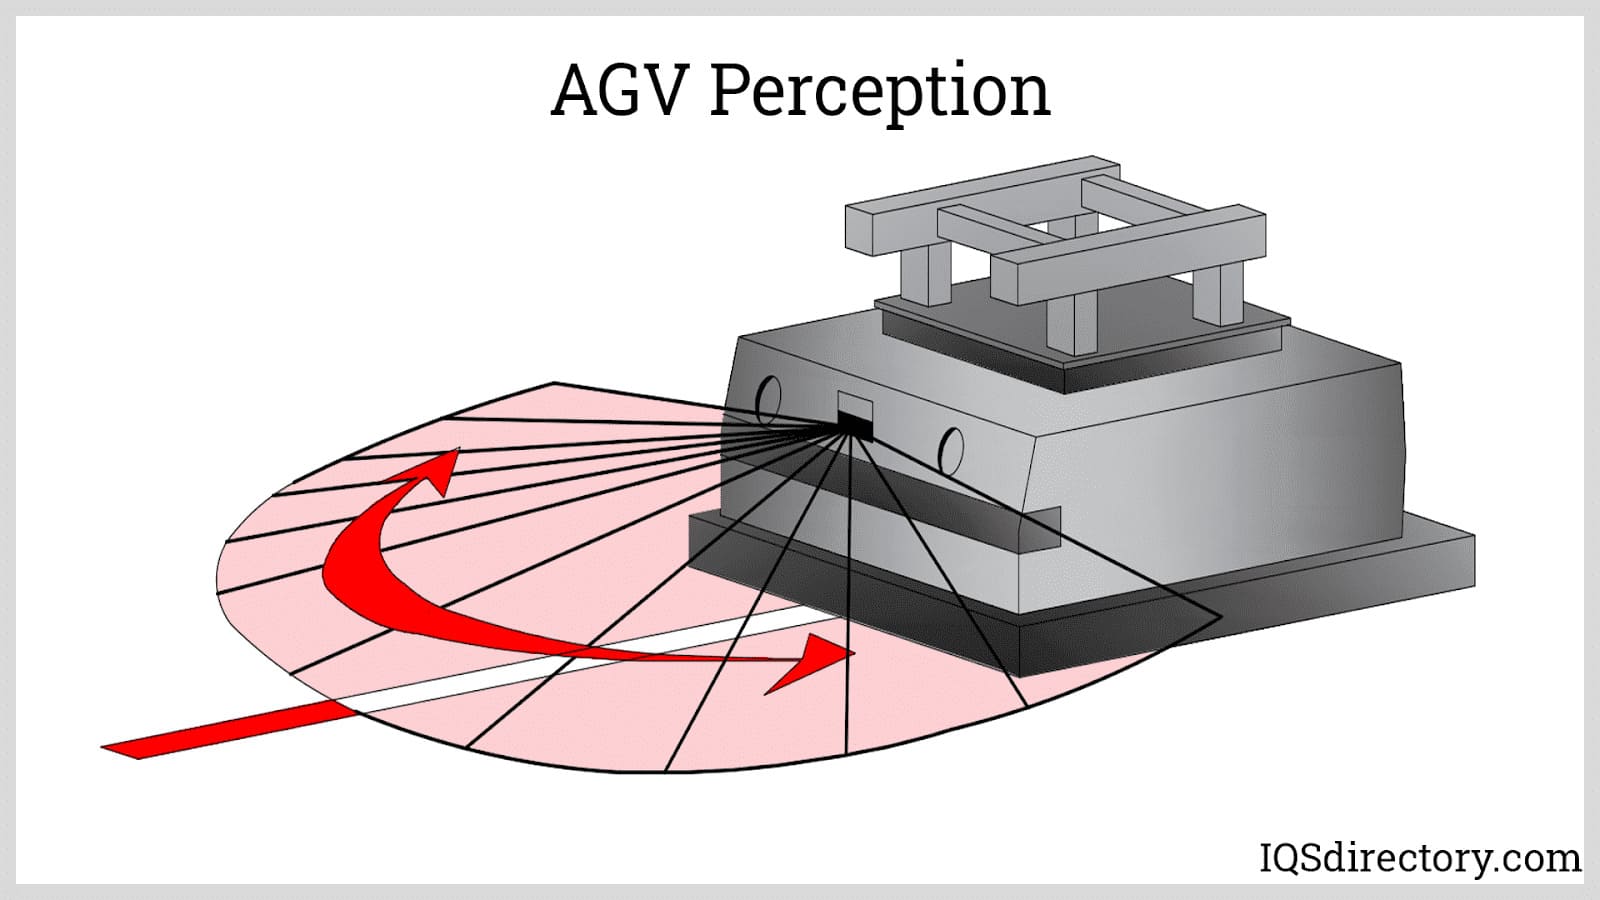 AGV Perception